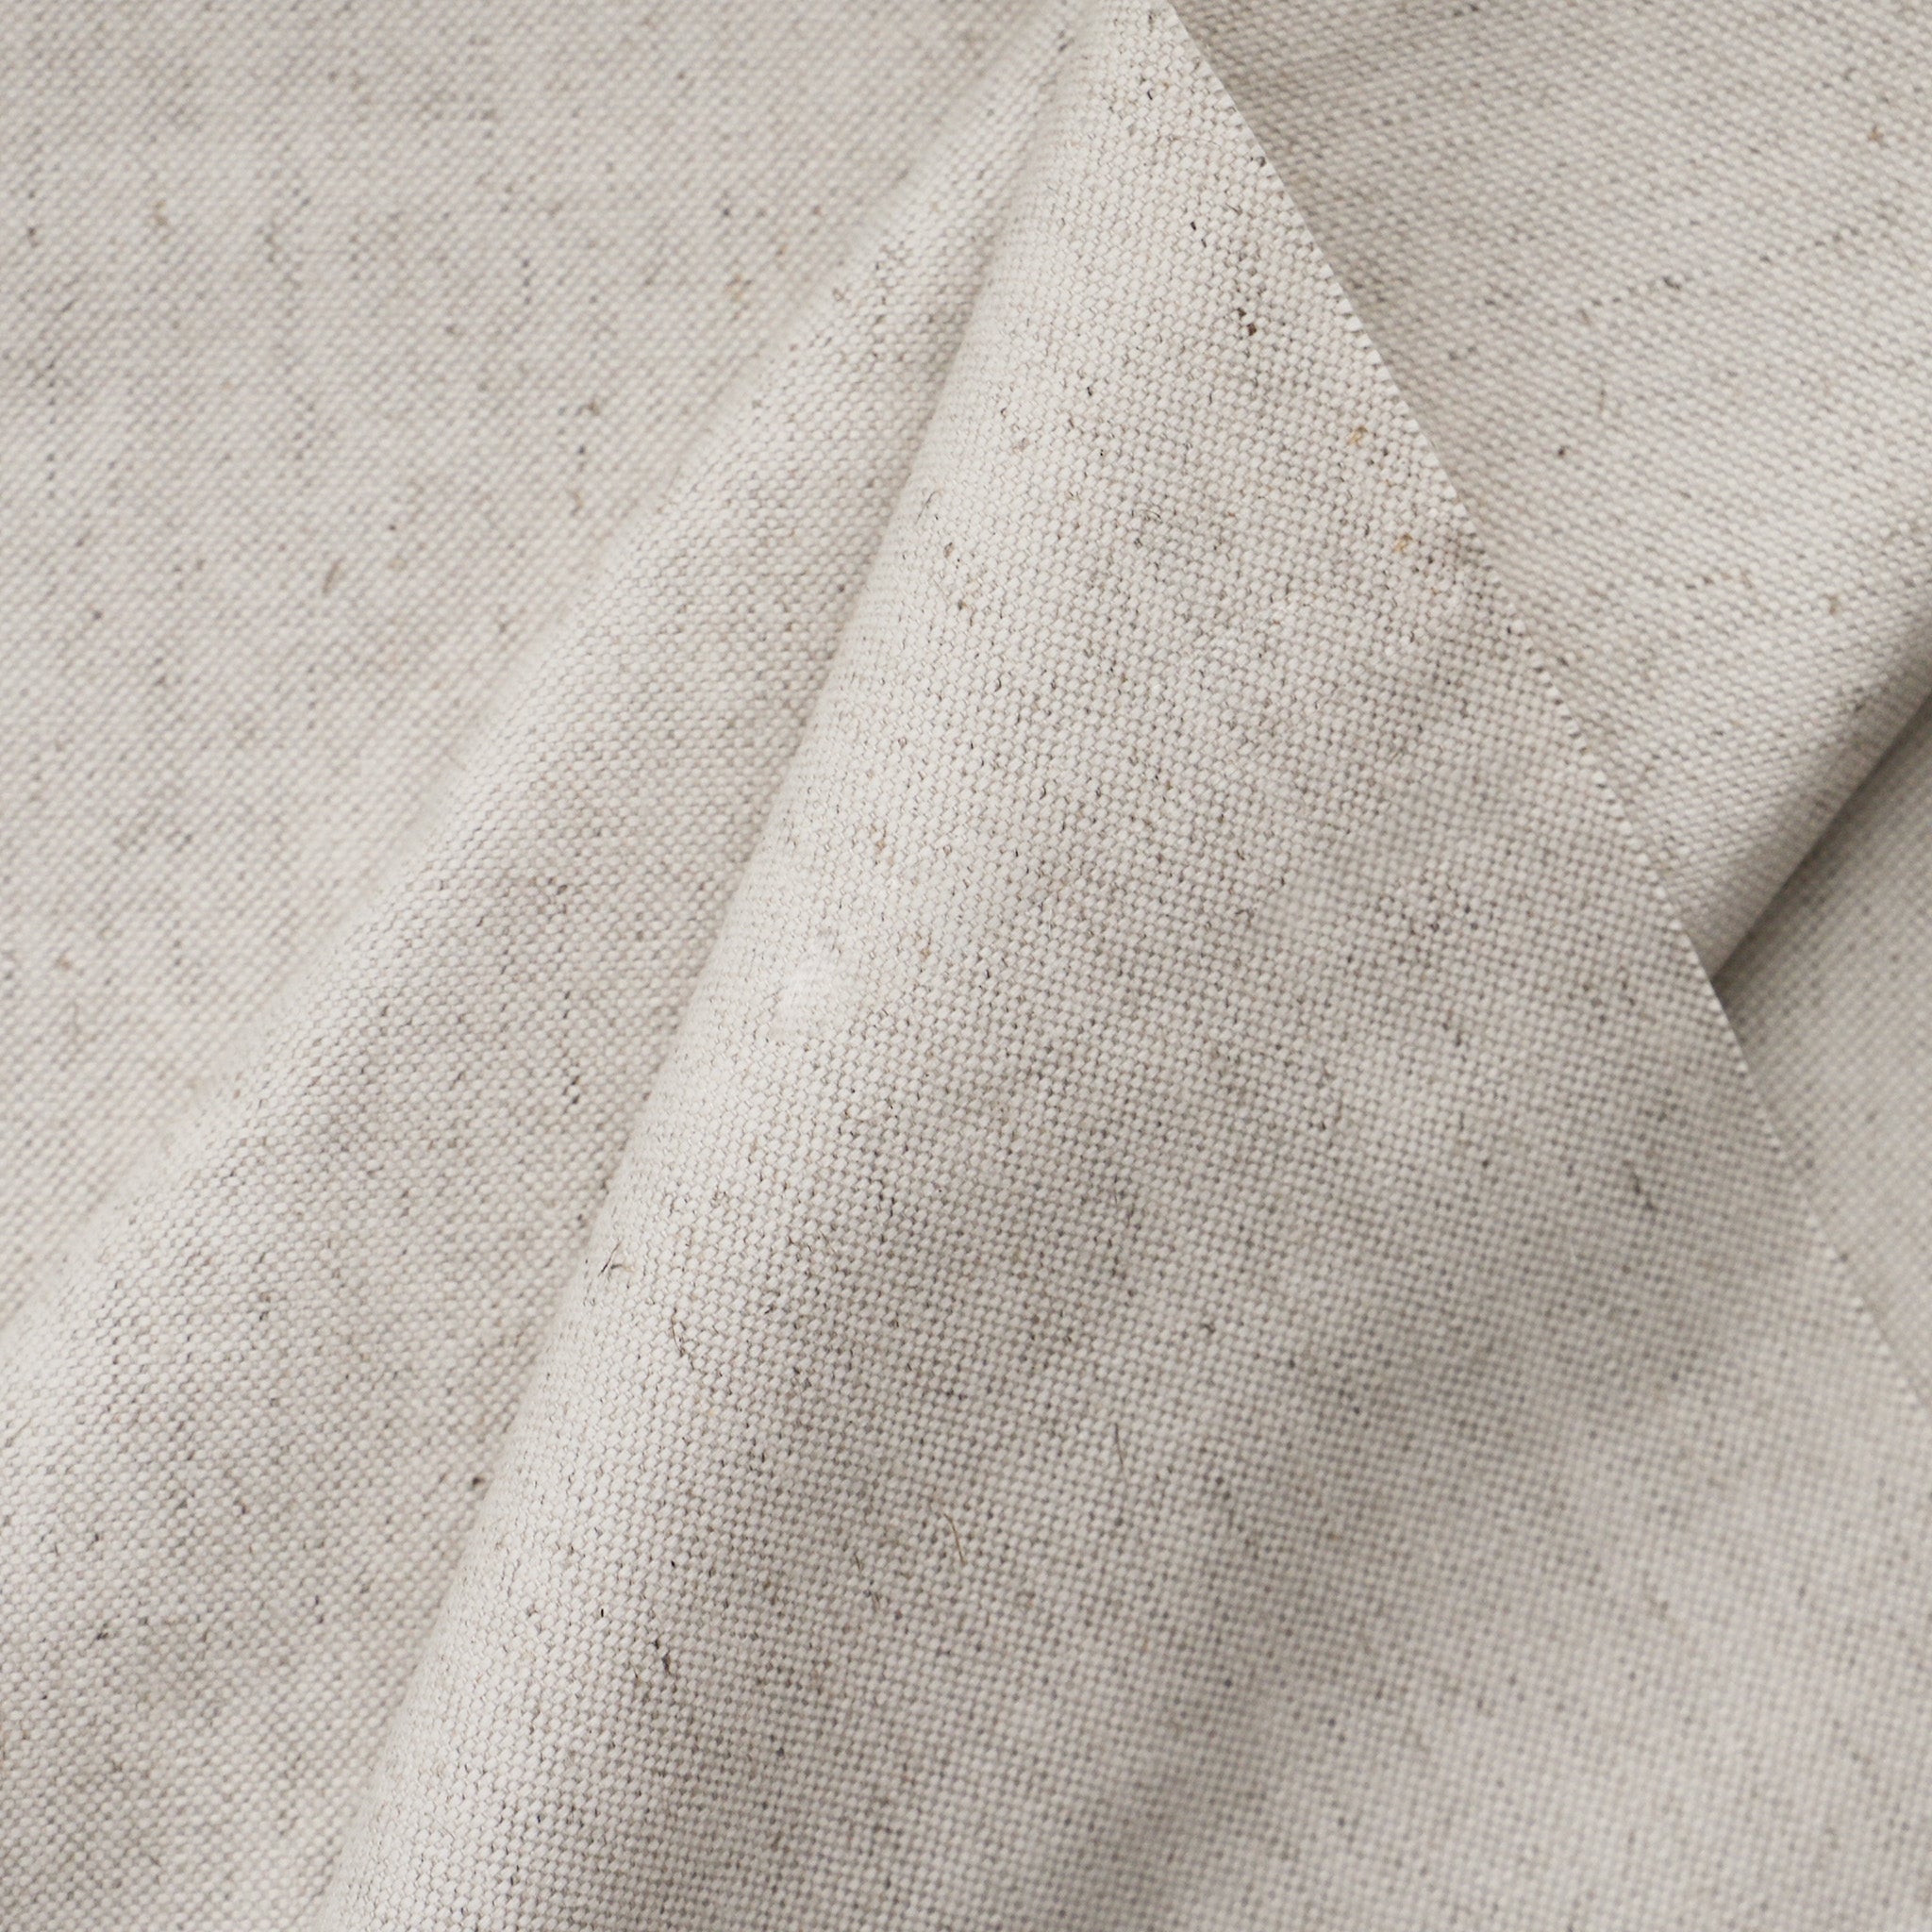 Linen Oat Fabric Close-Up